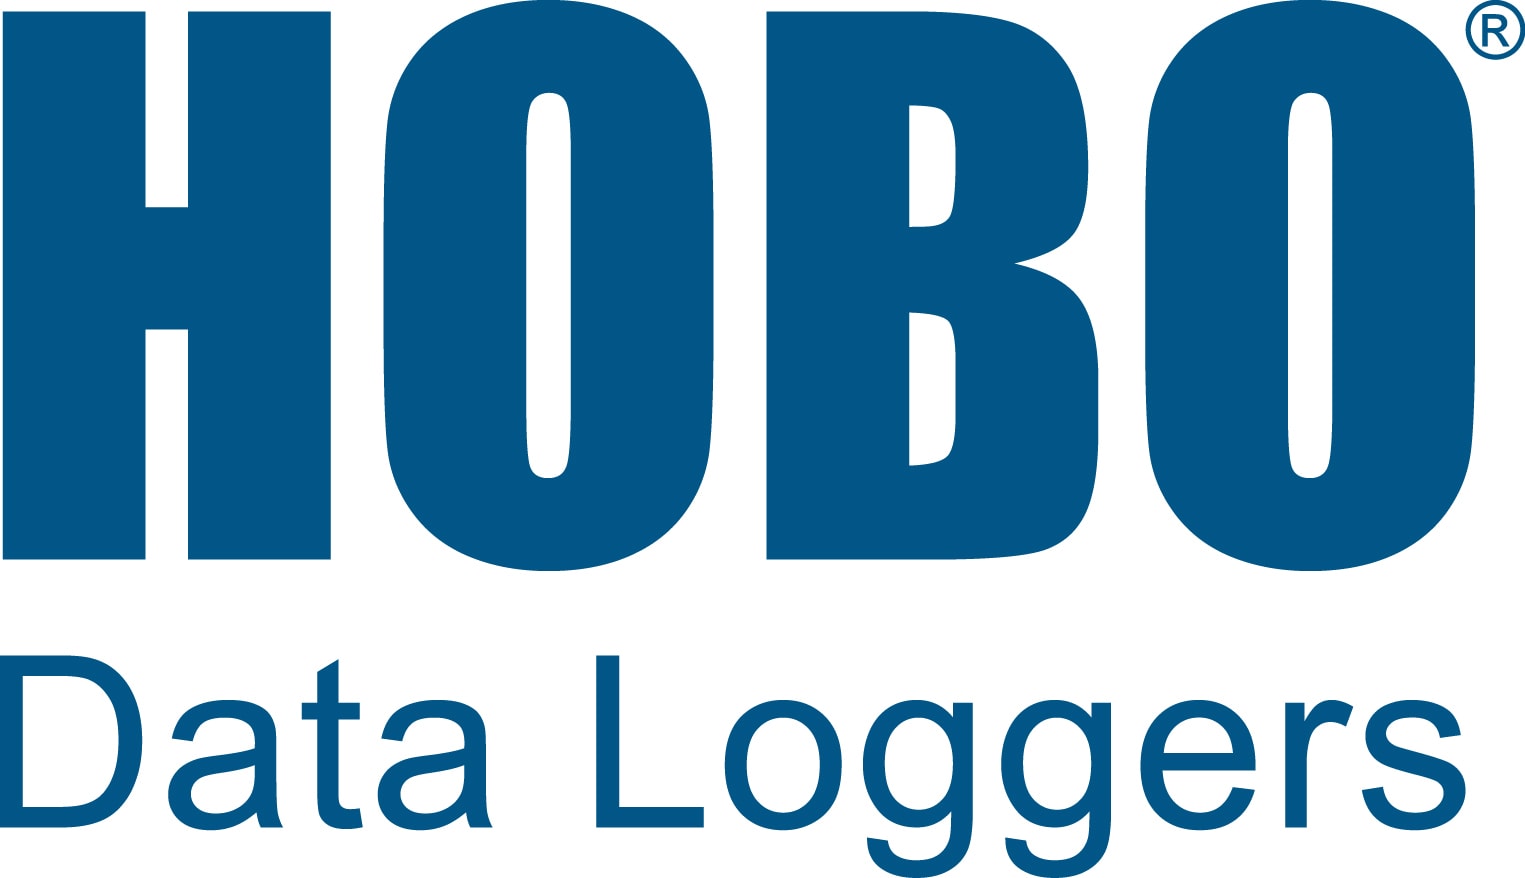 hobo-data-loggers